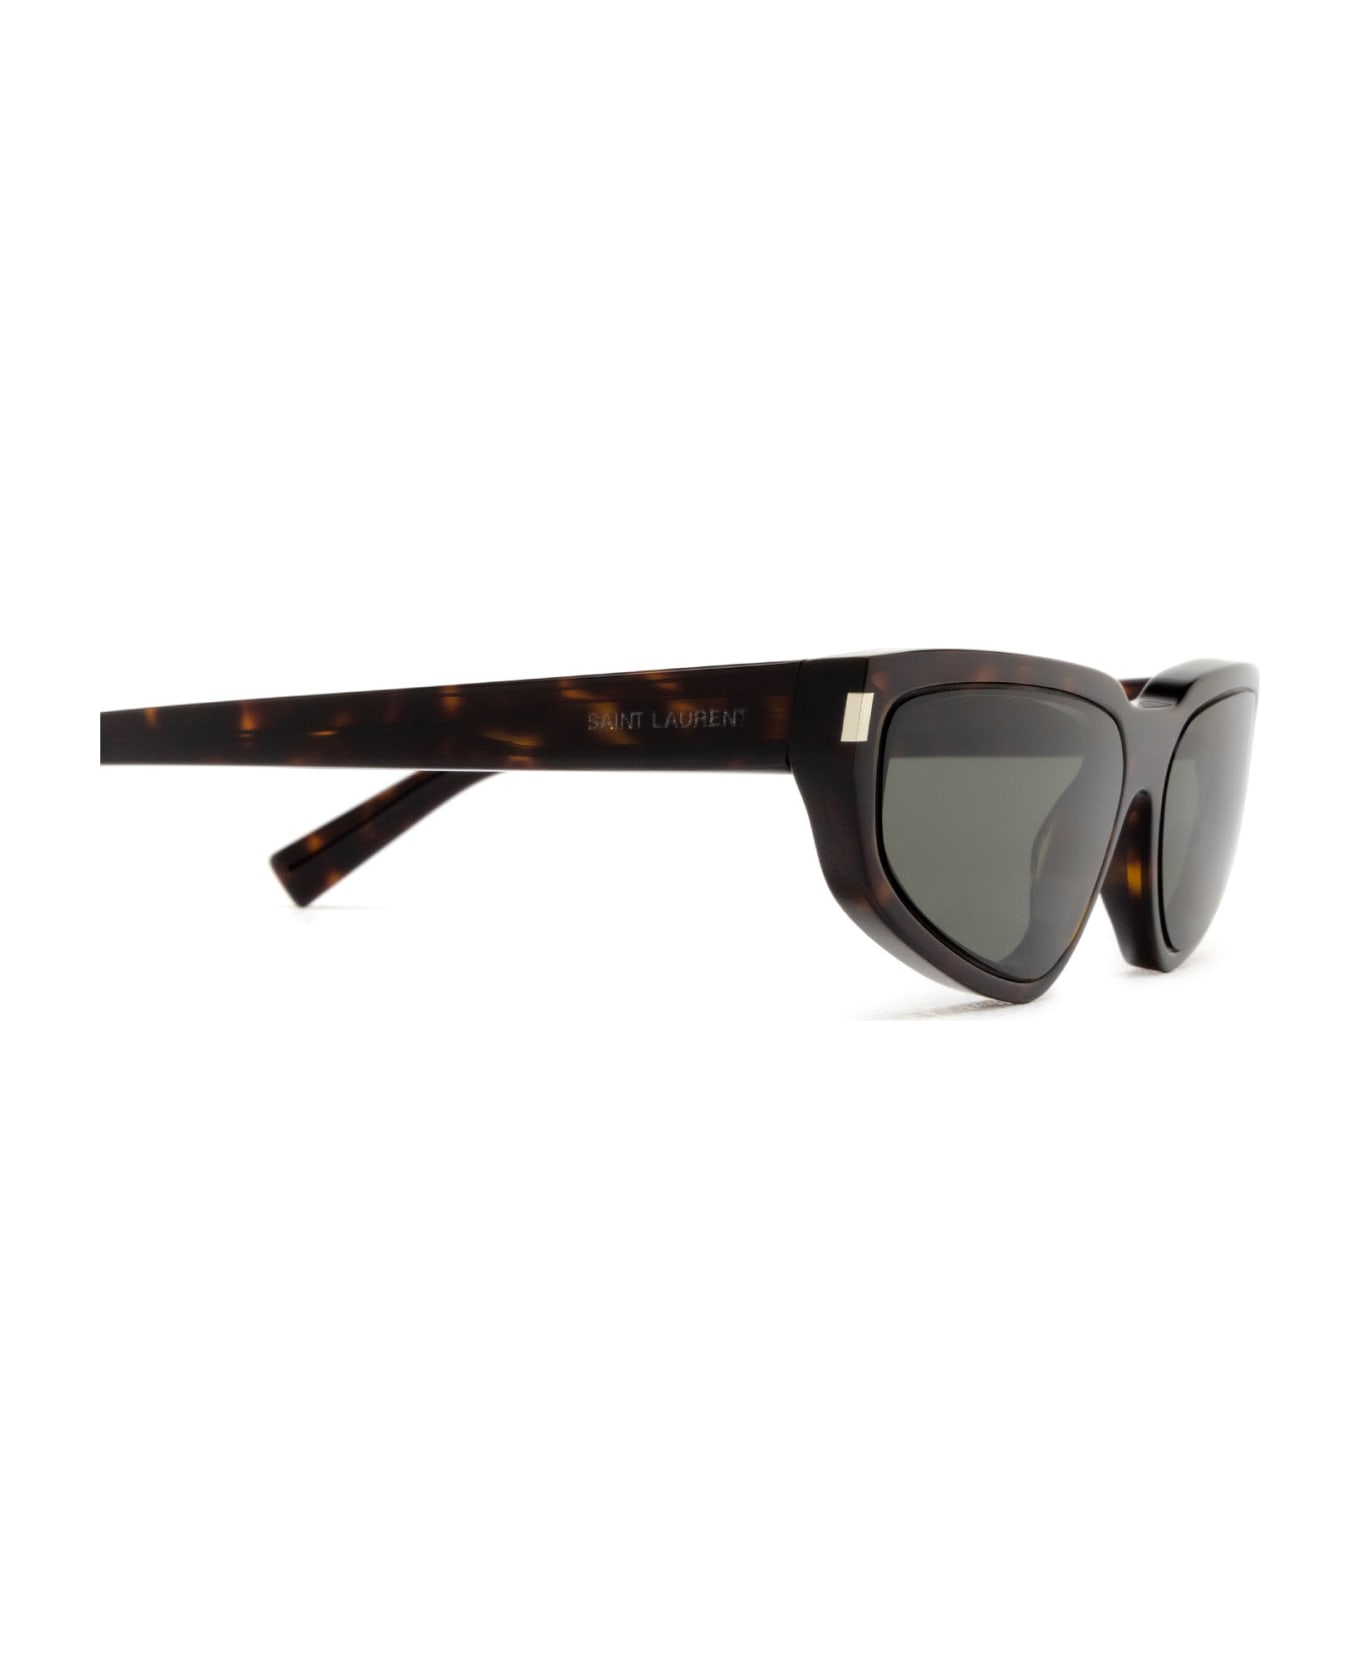 Saint Laurent Eyewear Sl 634 Havana Sunglasses - Havana サングラス